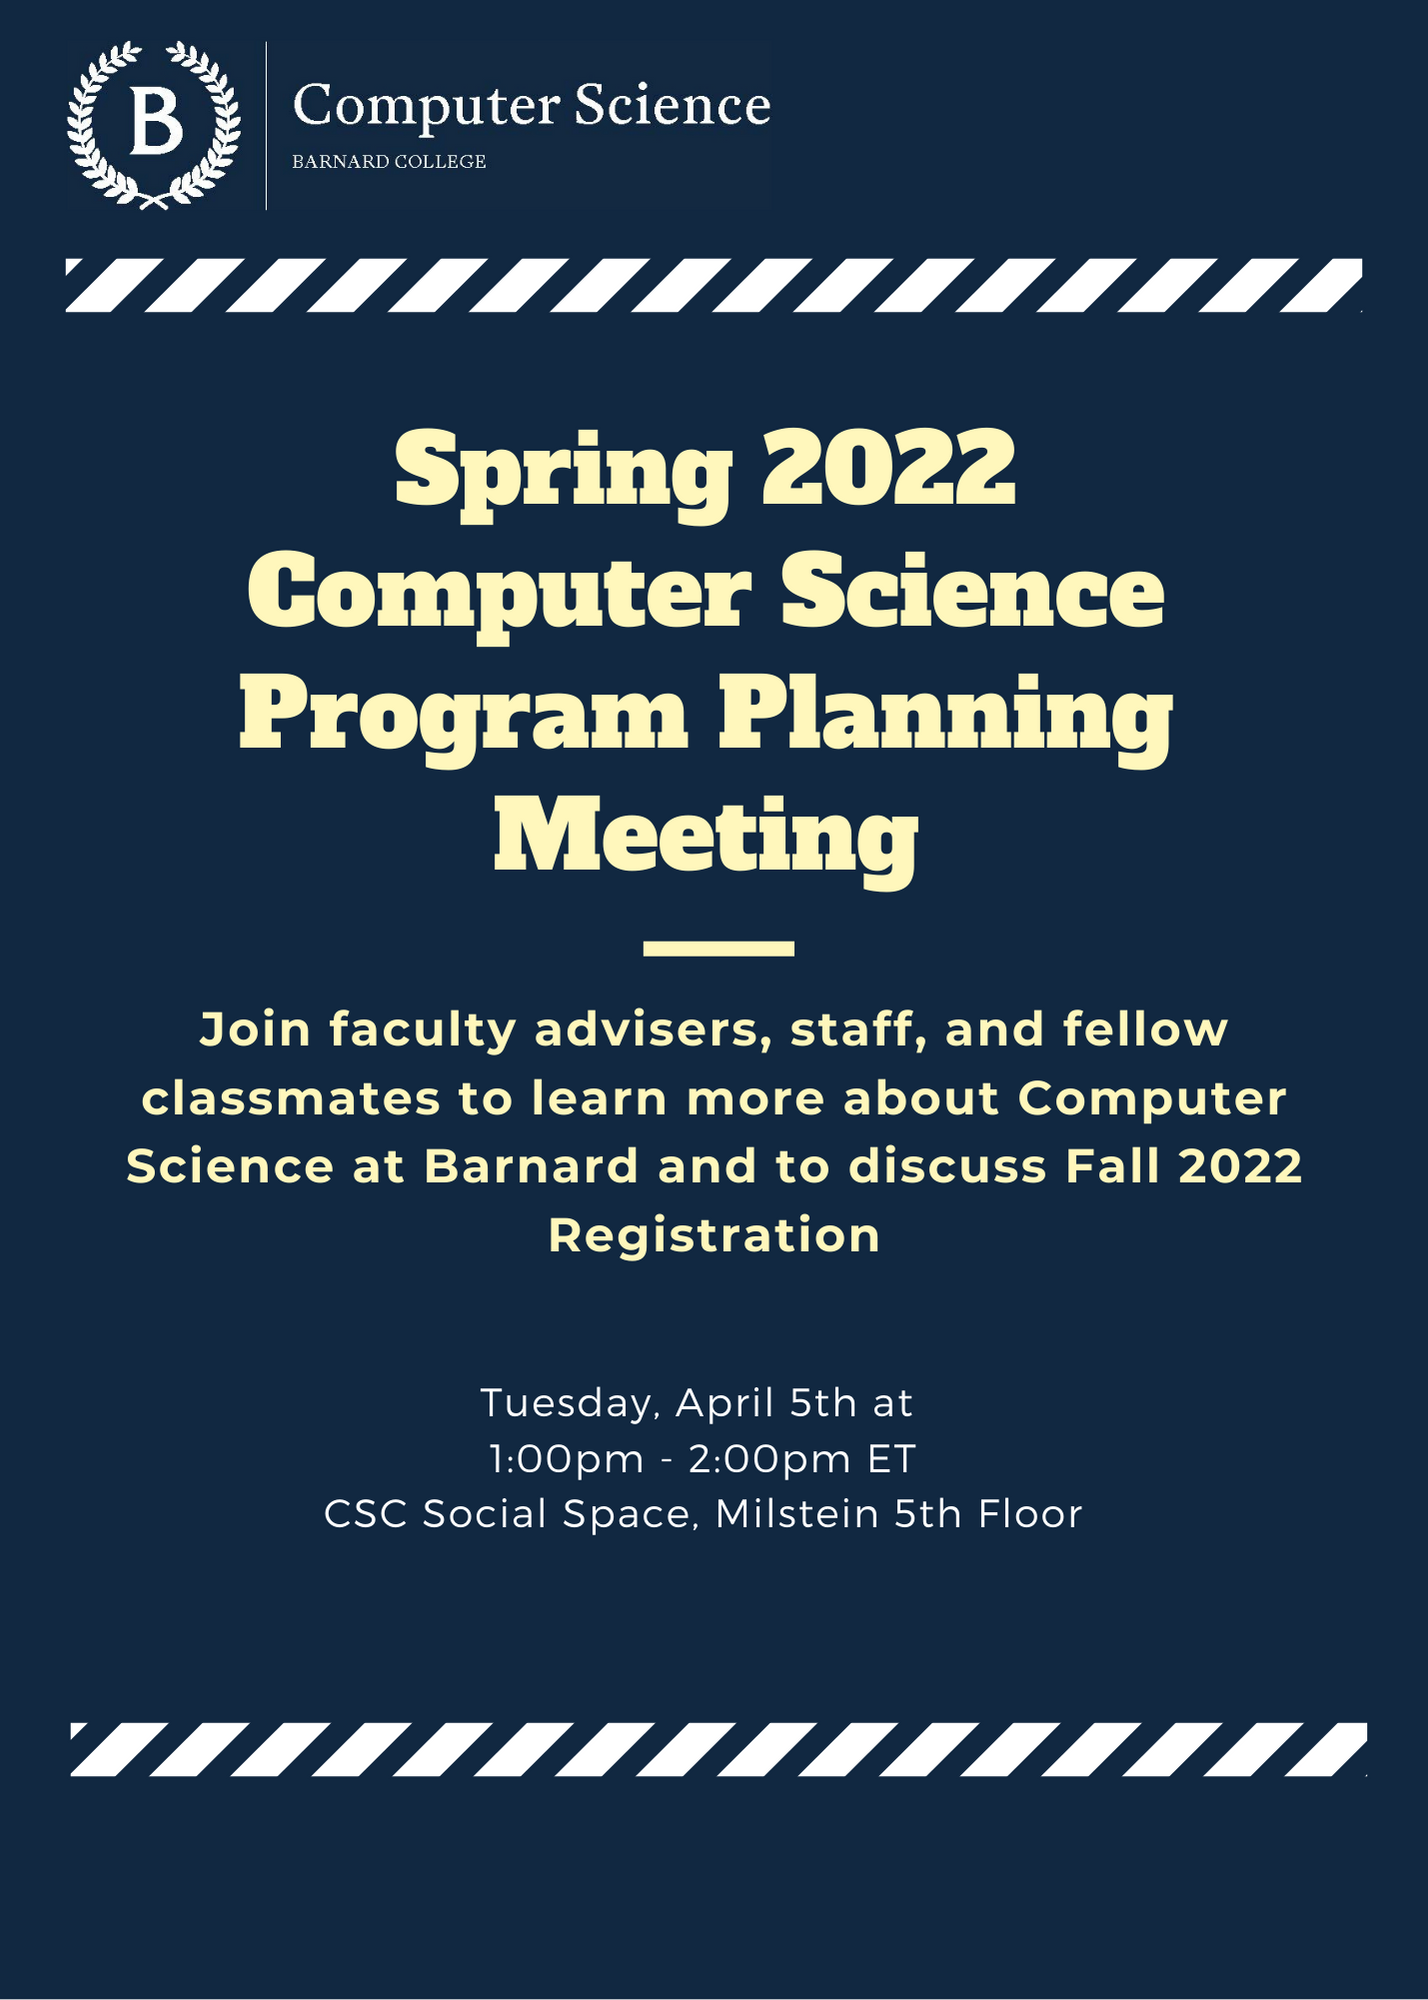 Spring 2022 Program Planning